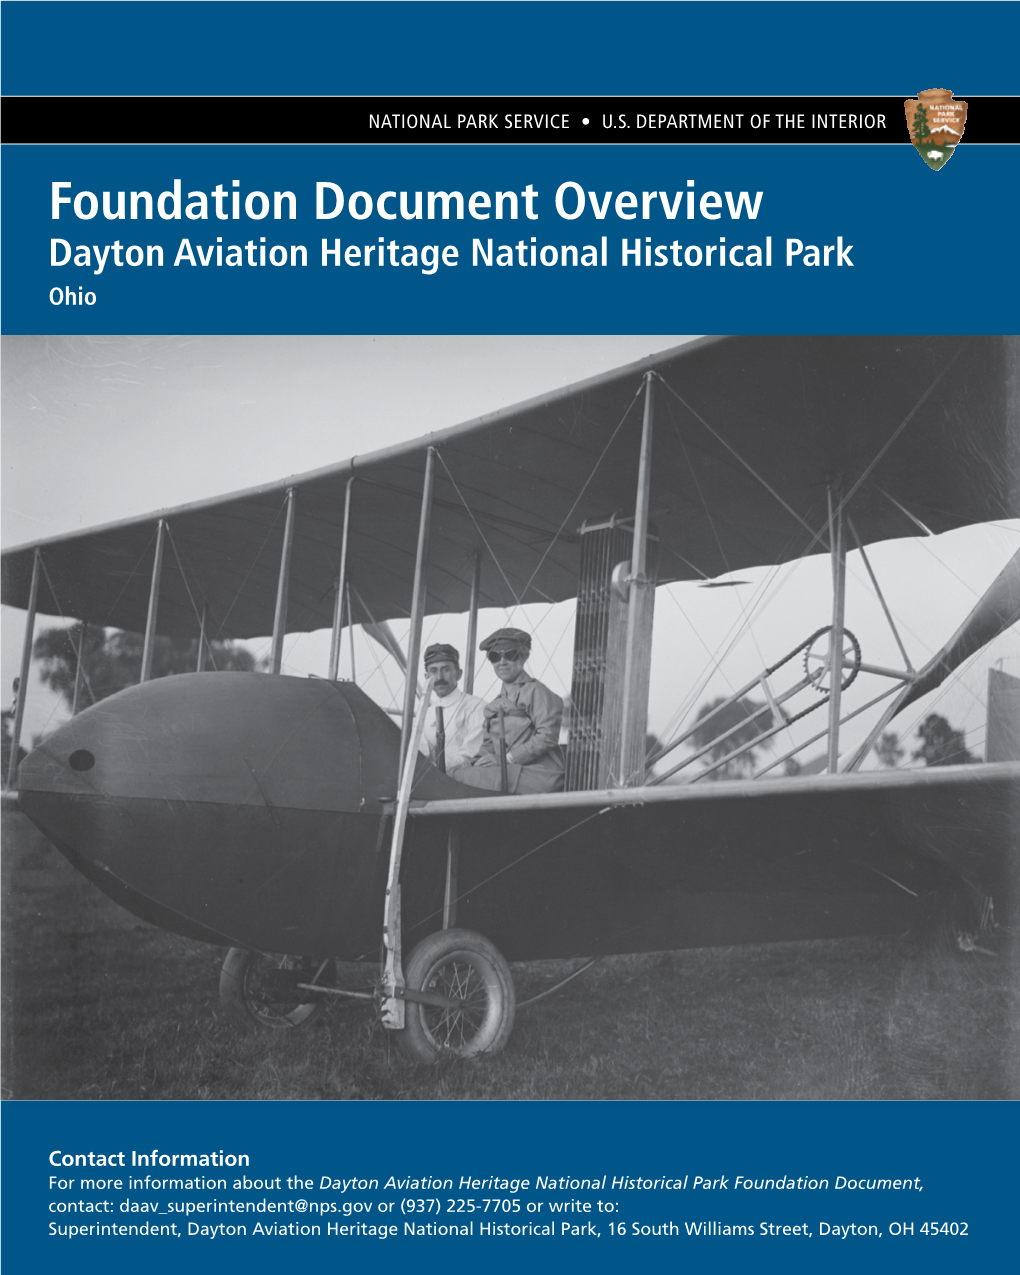 Dayton Aviation Heritage National Historical Park Foundation